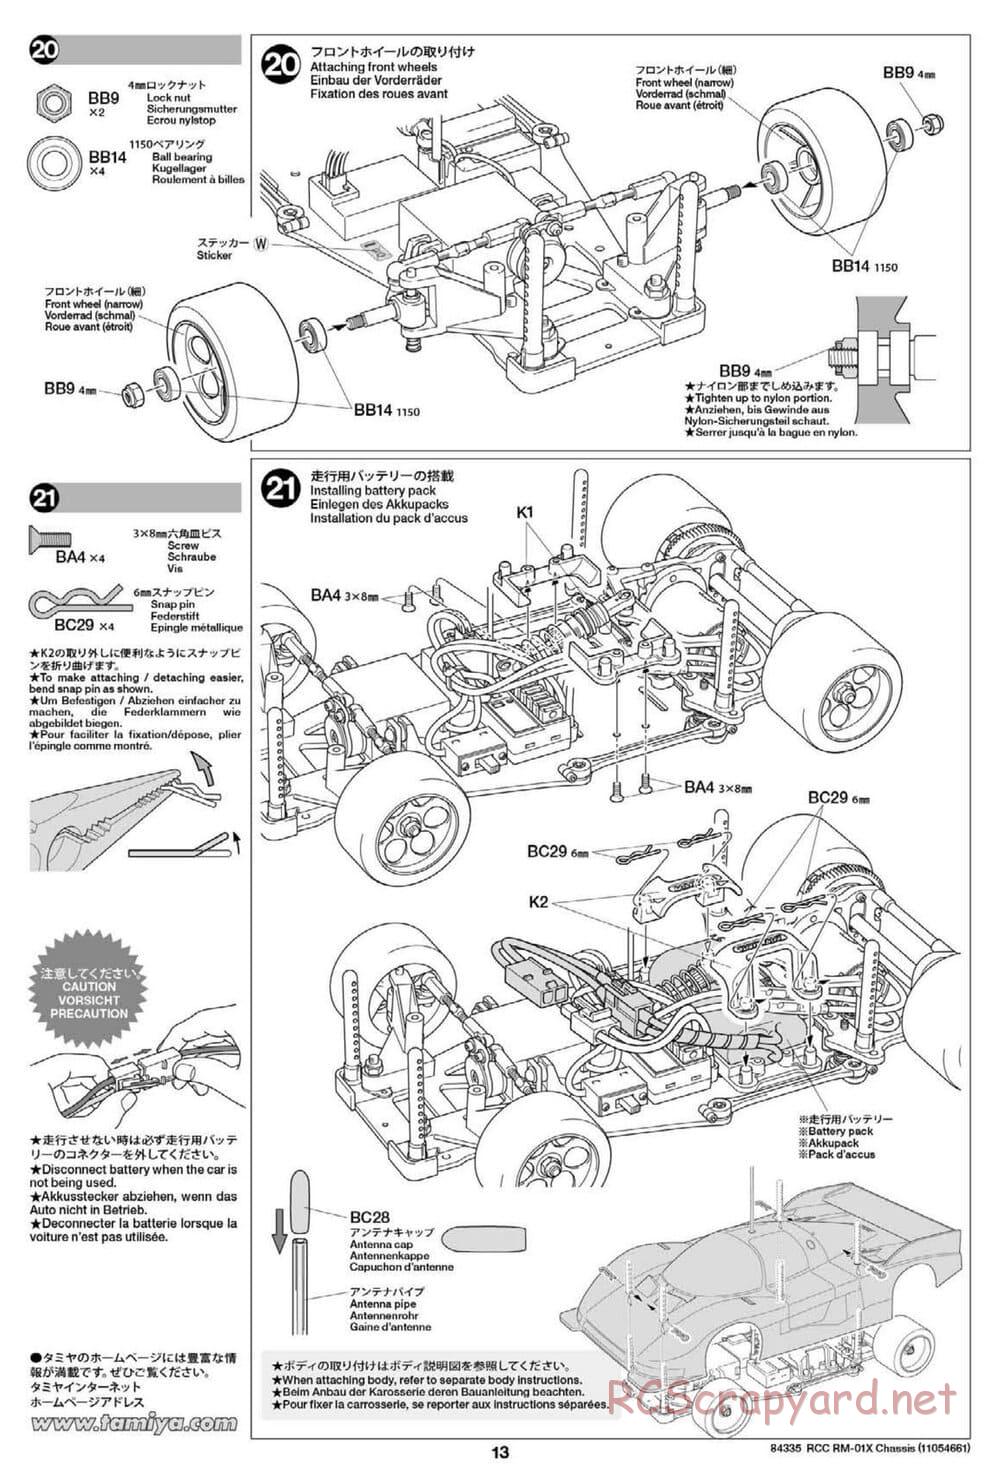 Tamiya - RM-01X Chassis - Manual - Page 13